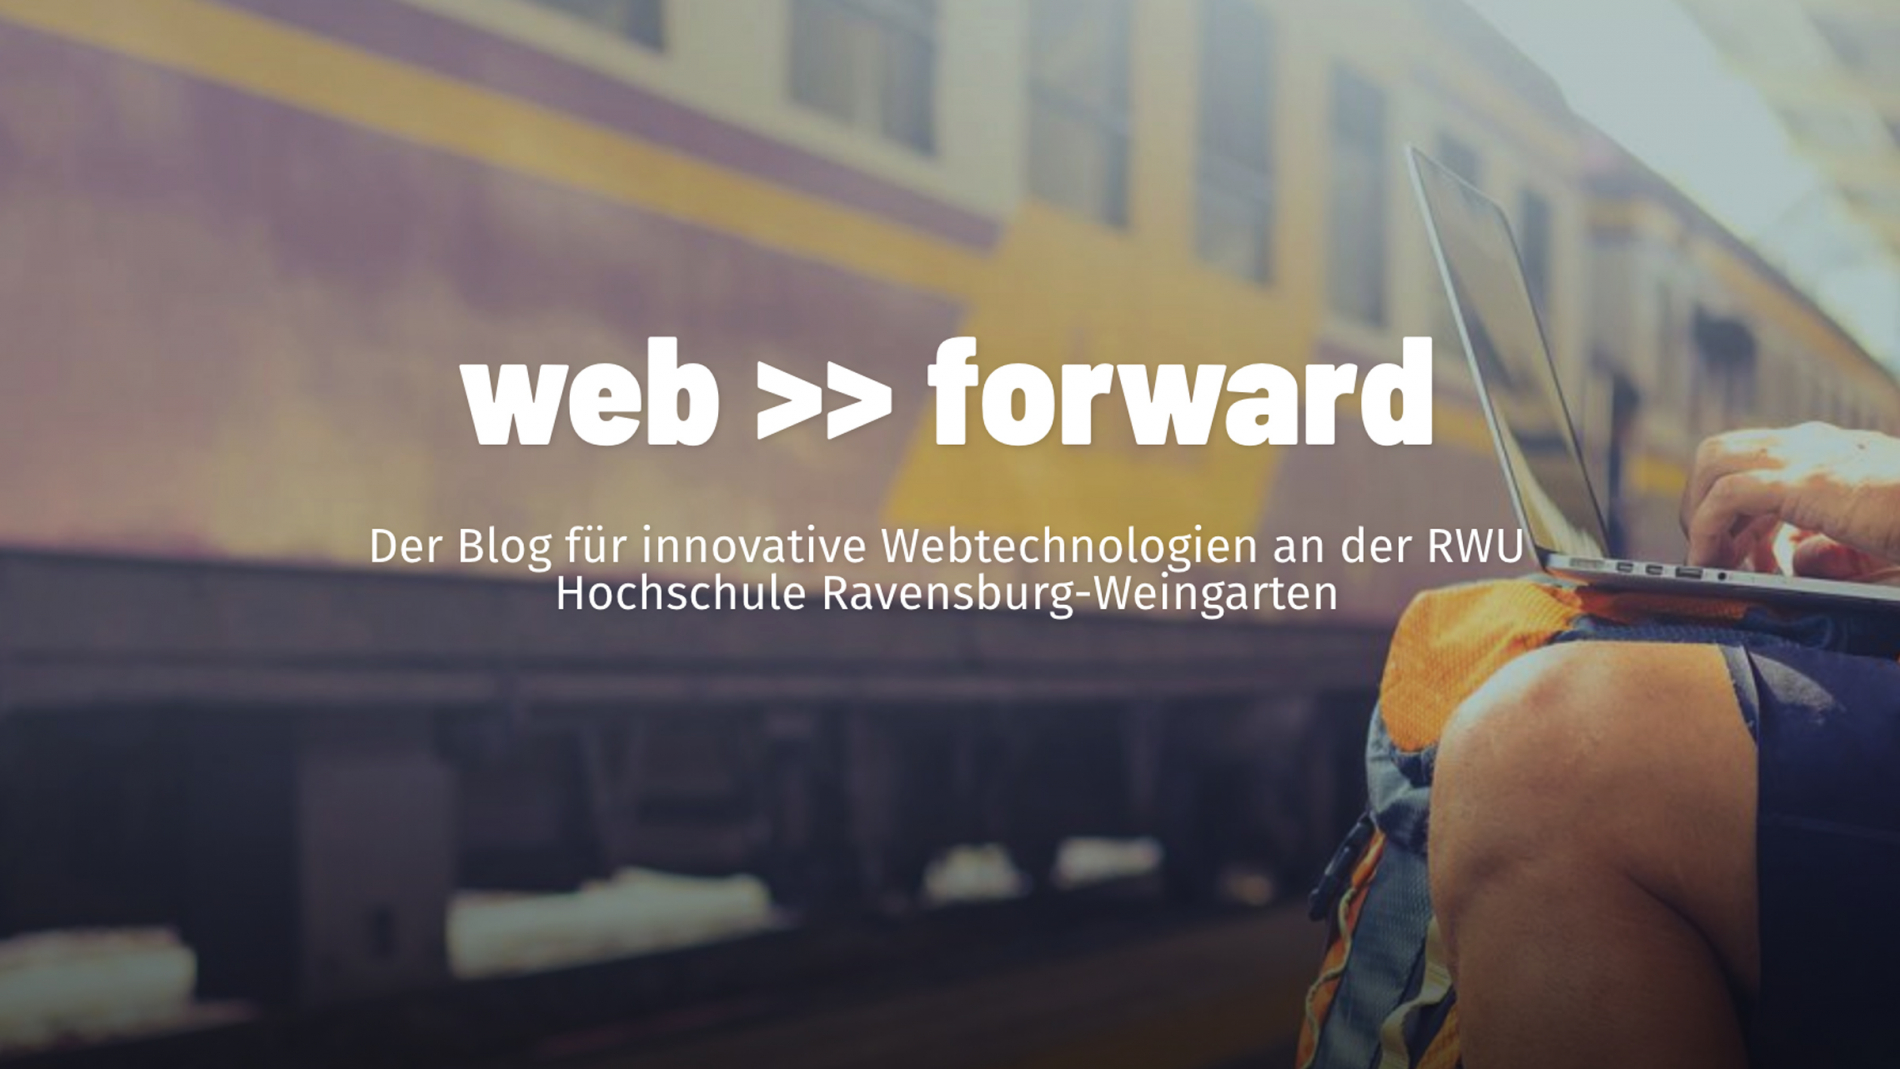 Keyvisual für den Web Forward Blog